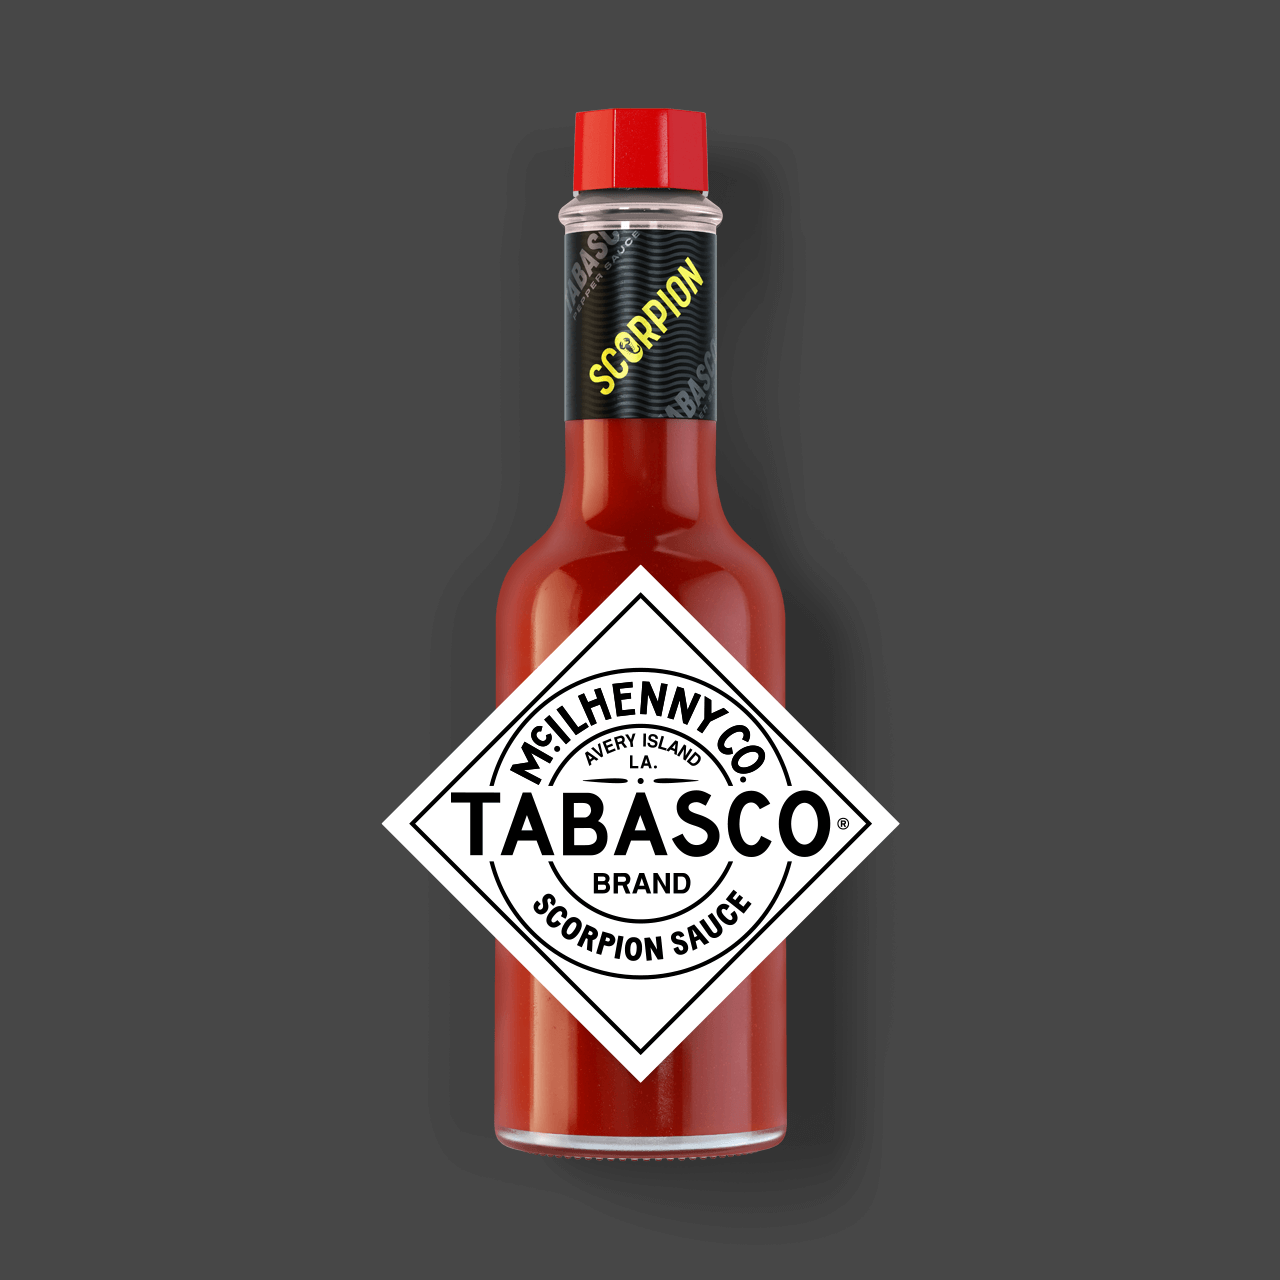 TABASCO® Scorpion Sauce